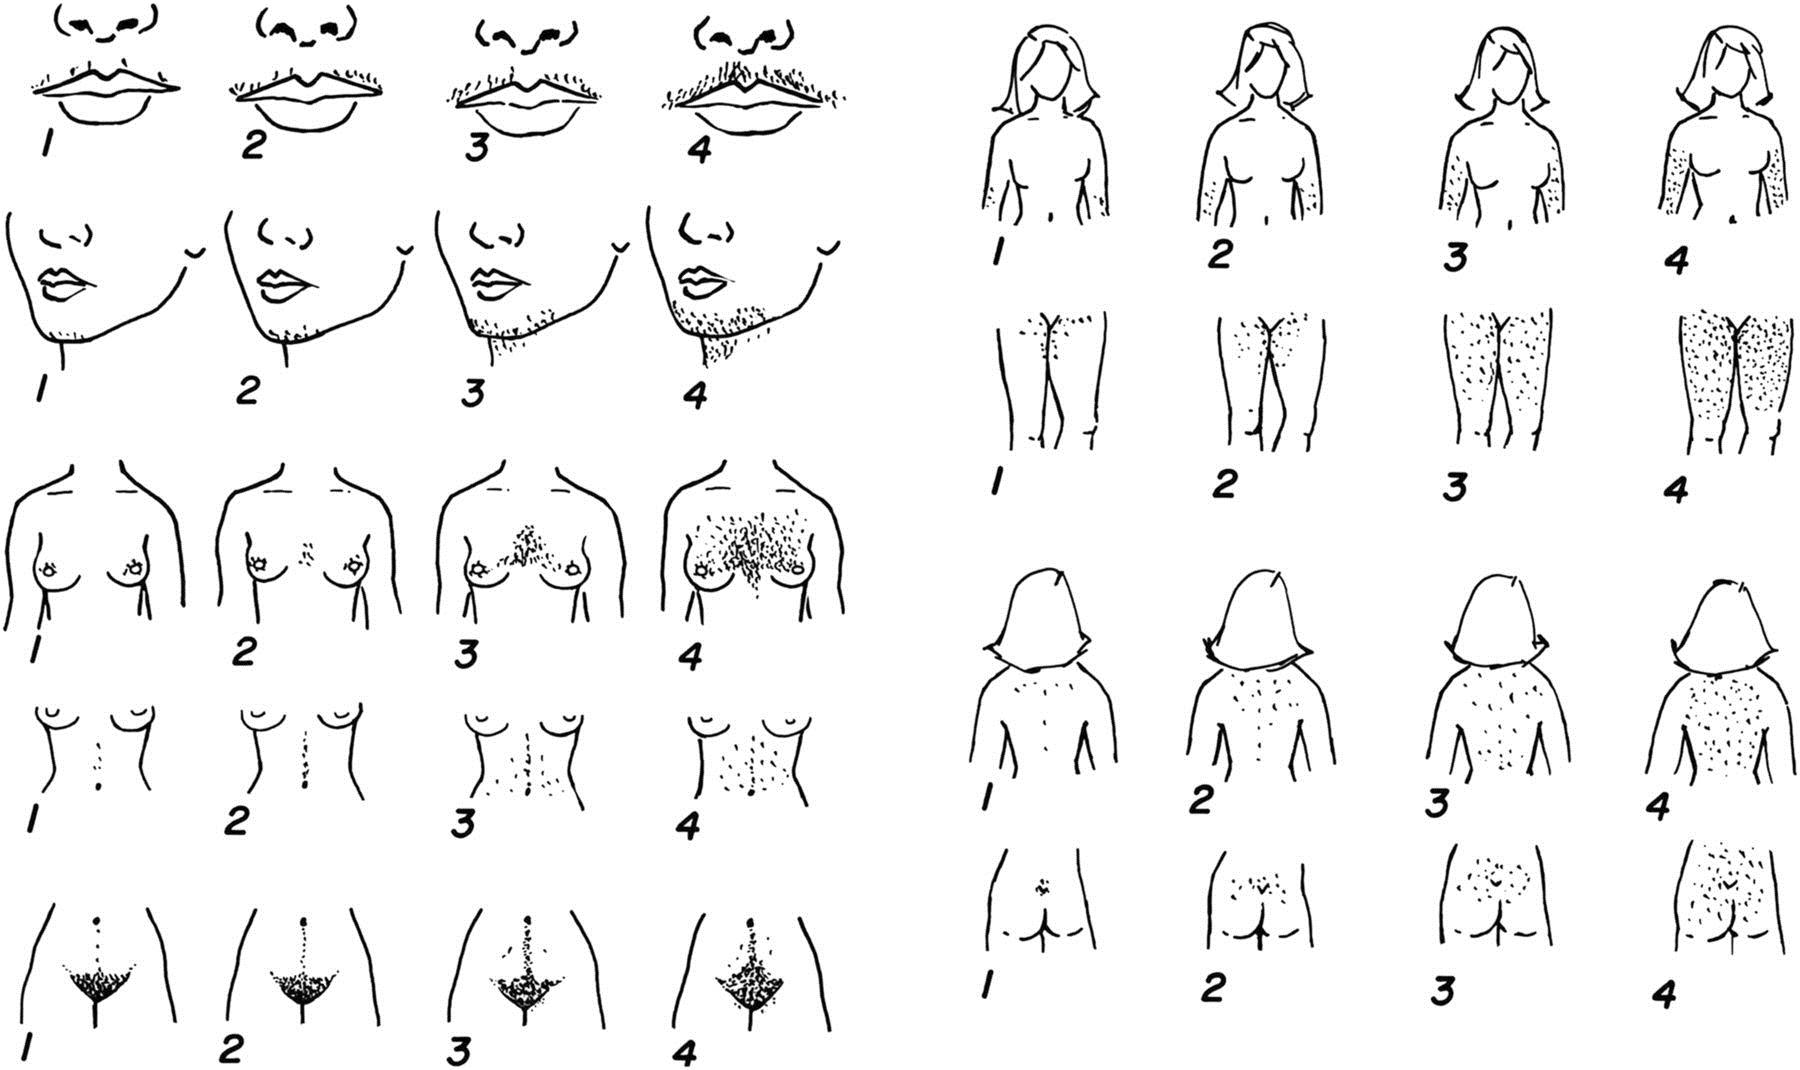 форма груди у женщин характер фото 59